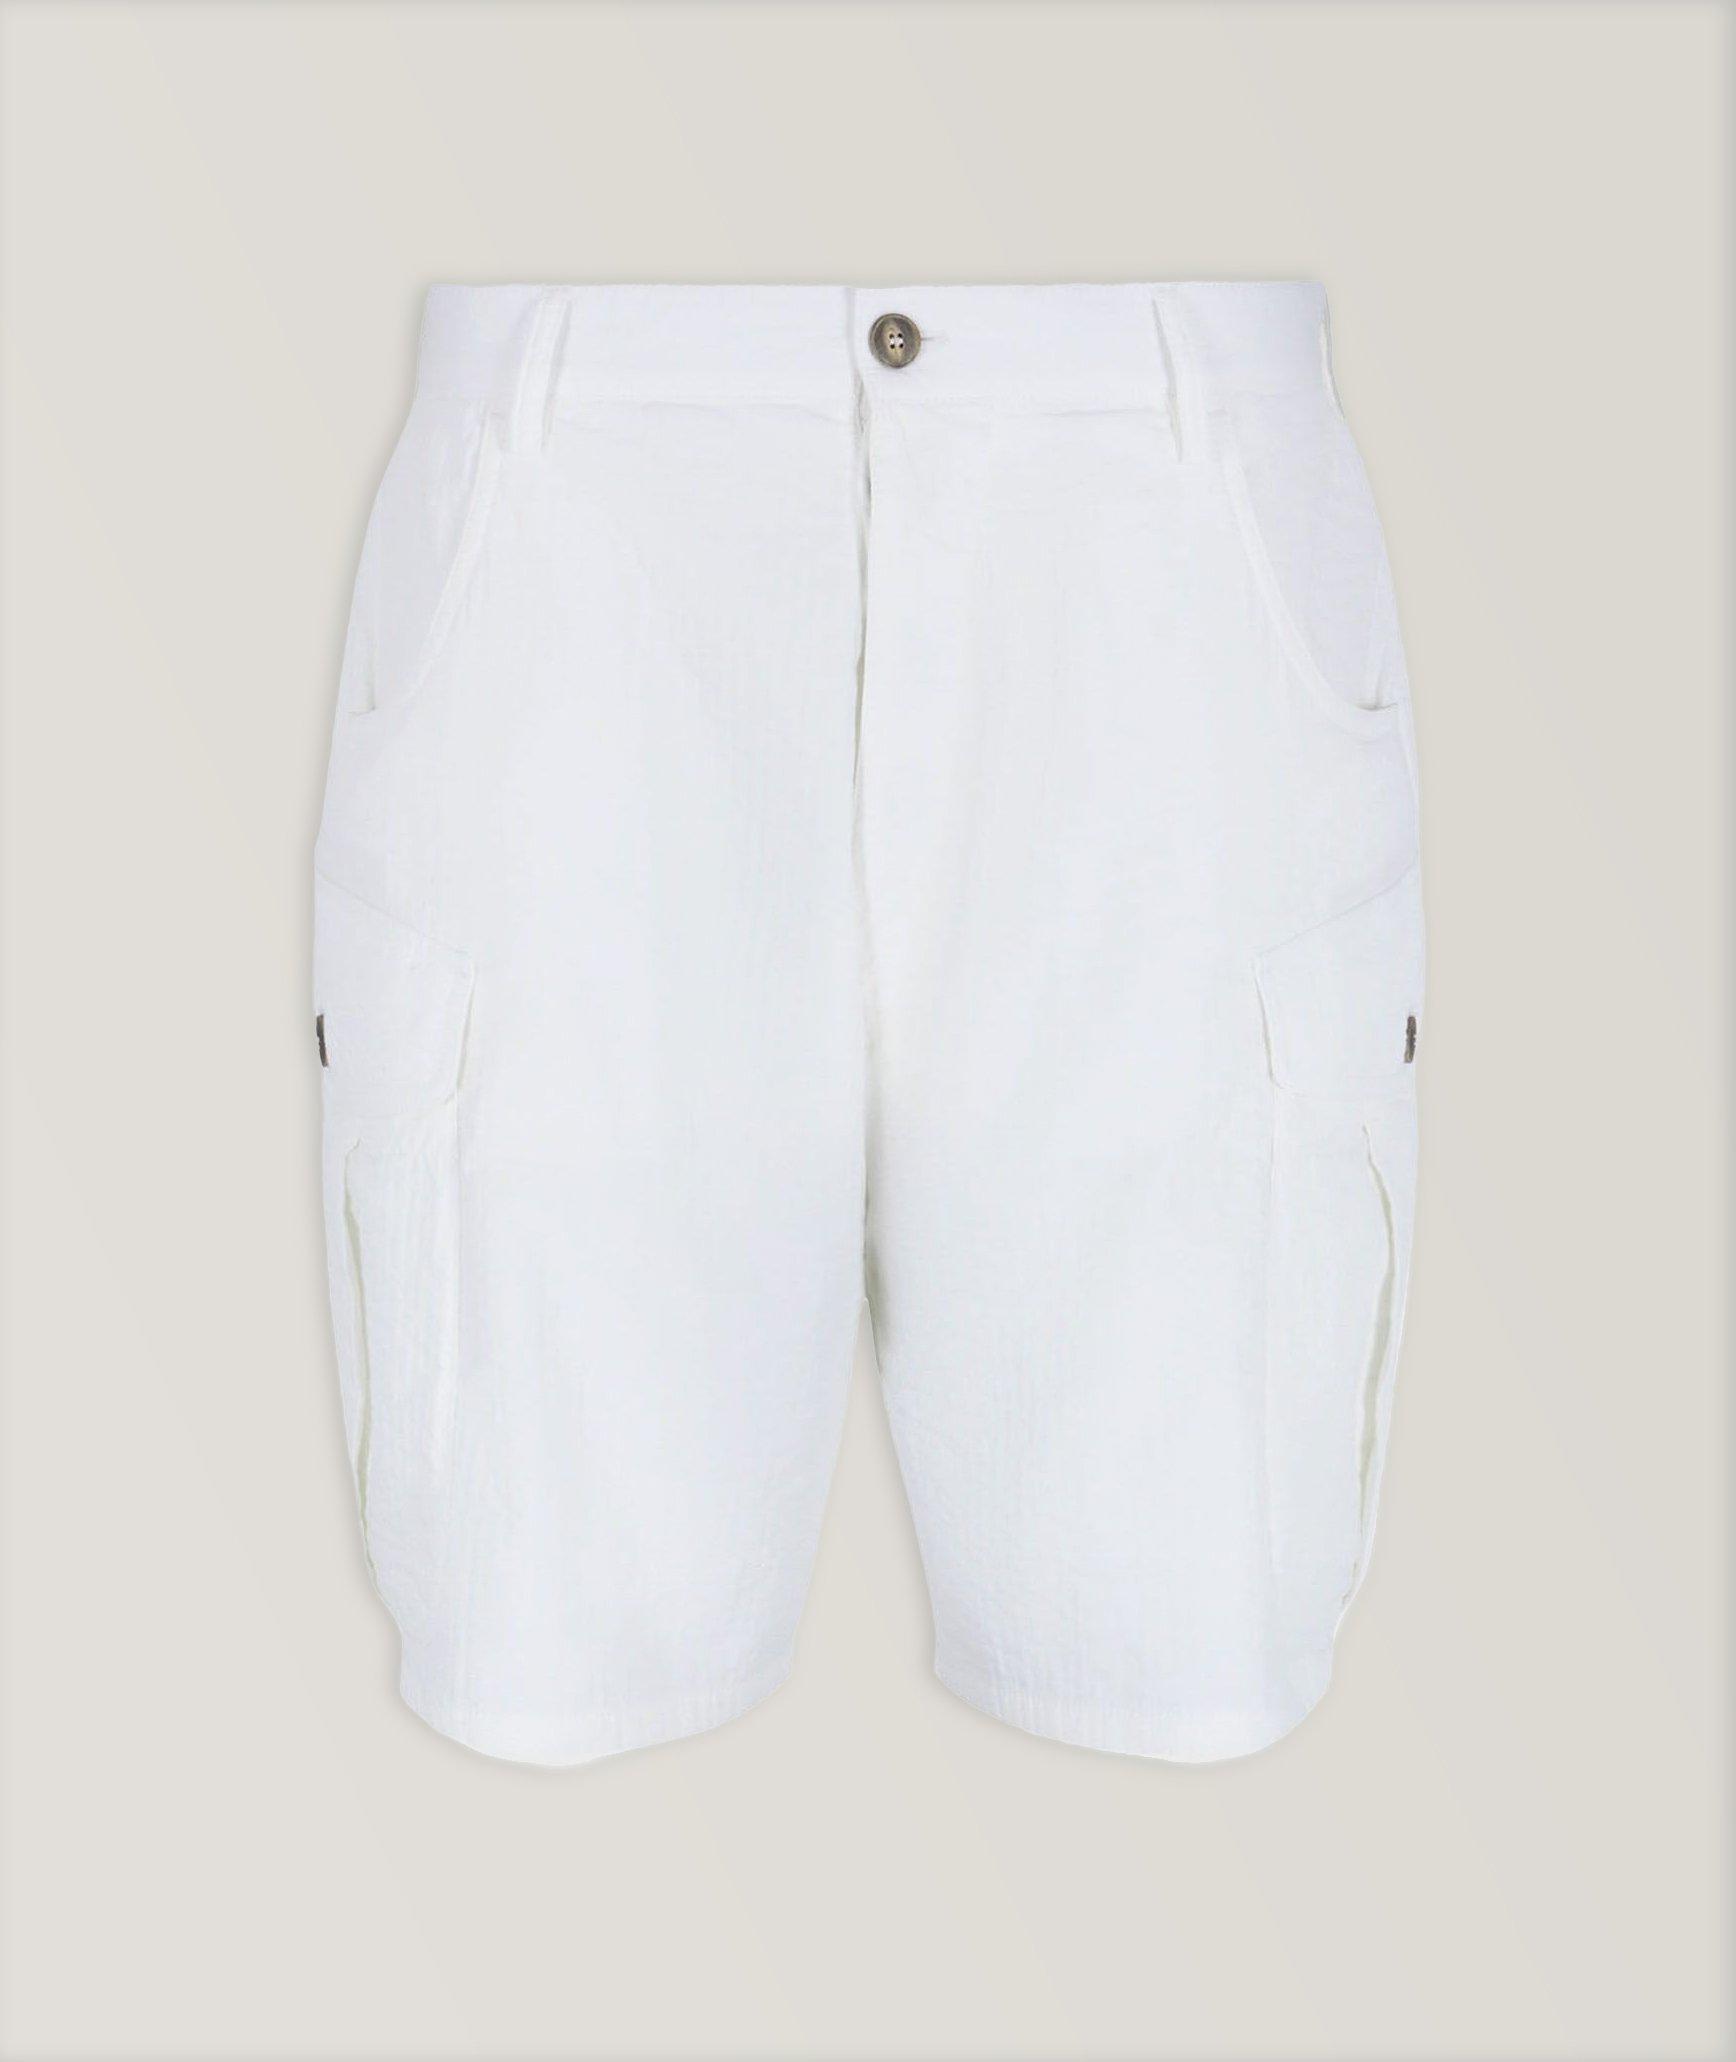 Cotton-Blend Board Shorts image 0